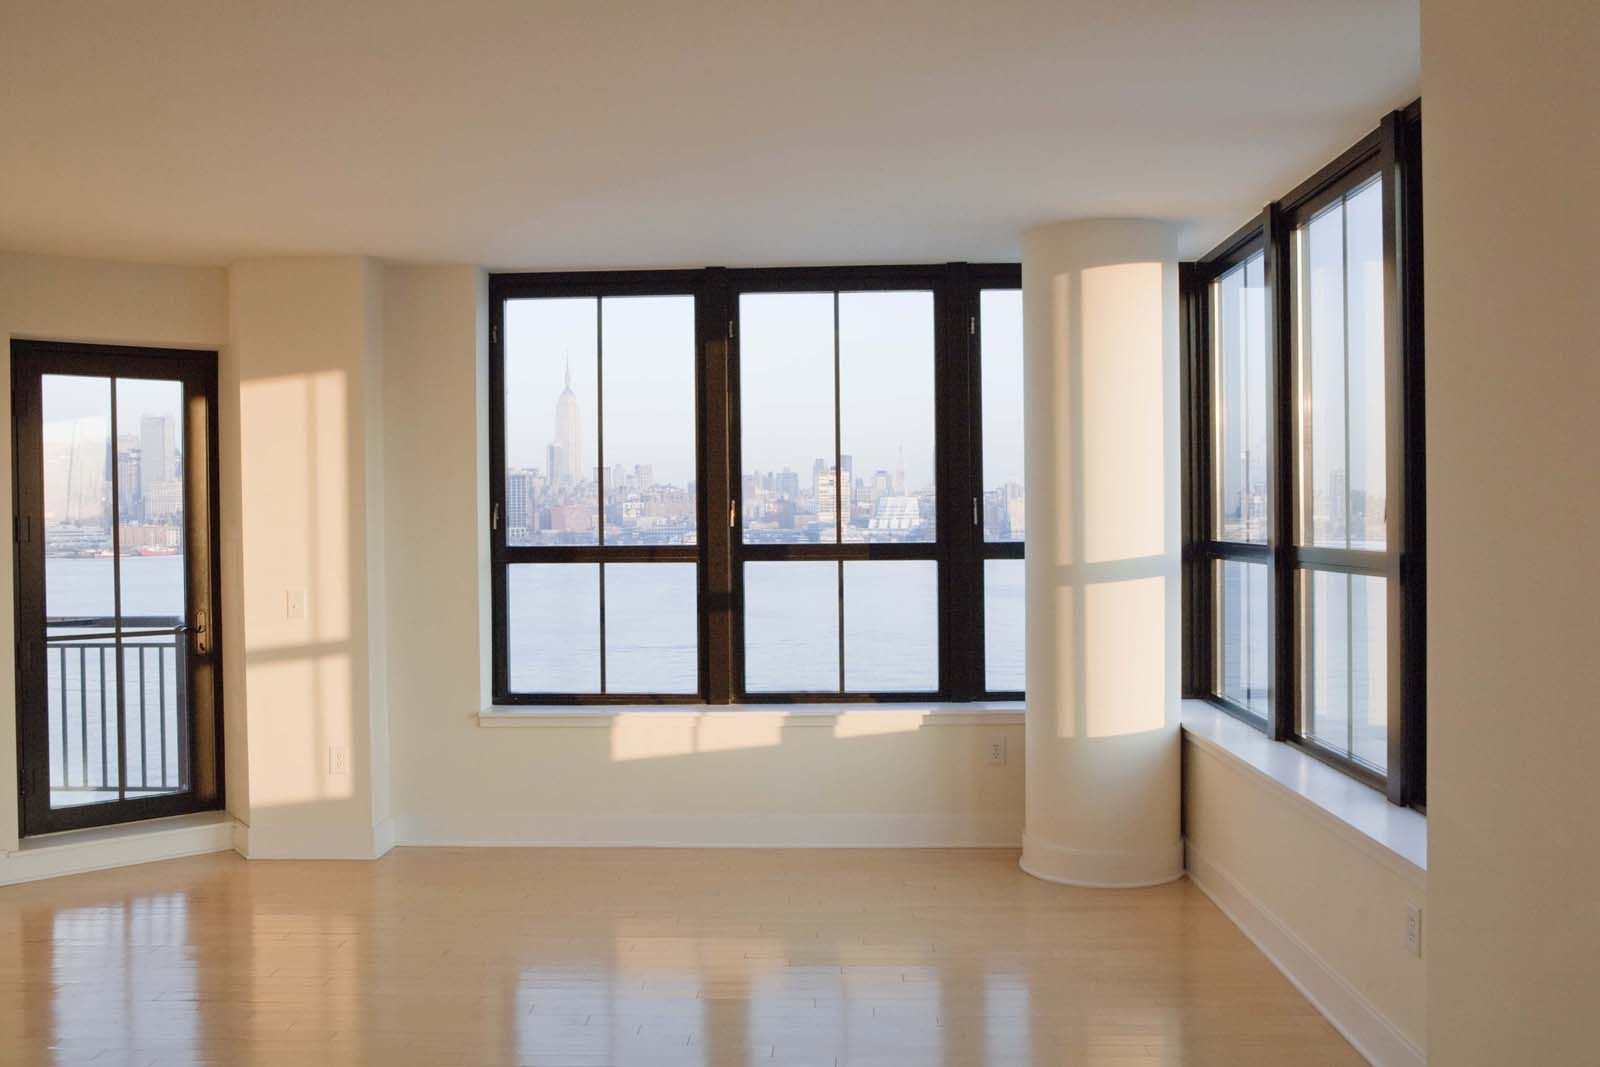 Vacant apartment, New York City, New York, USA